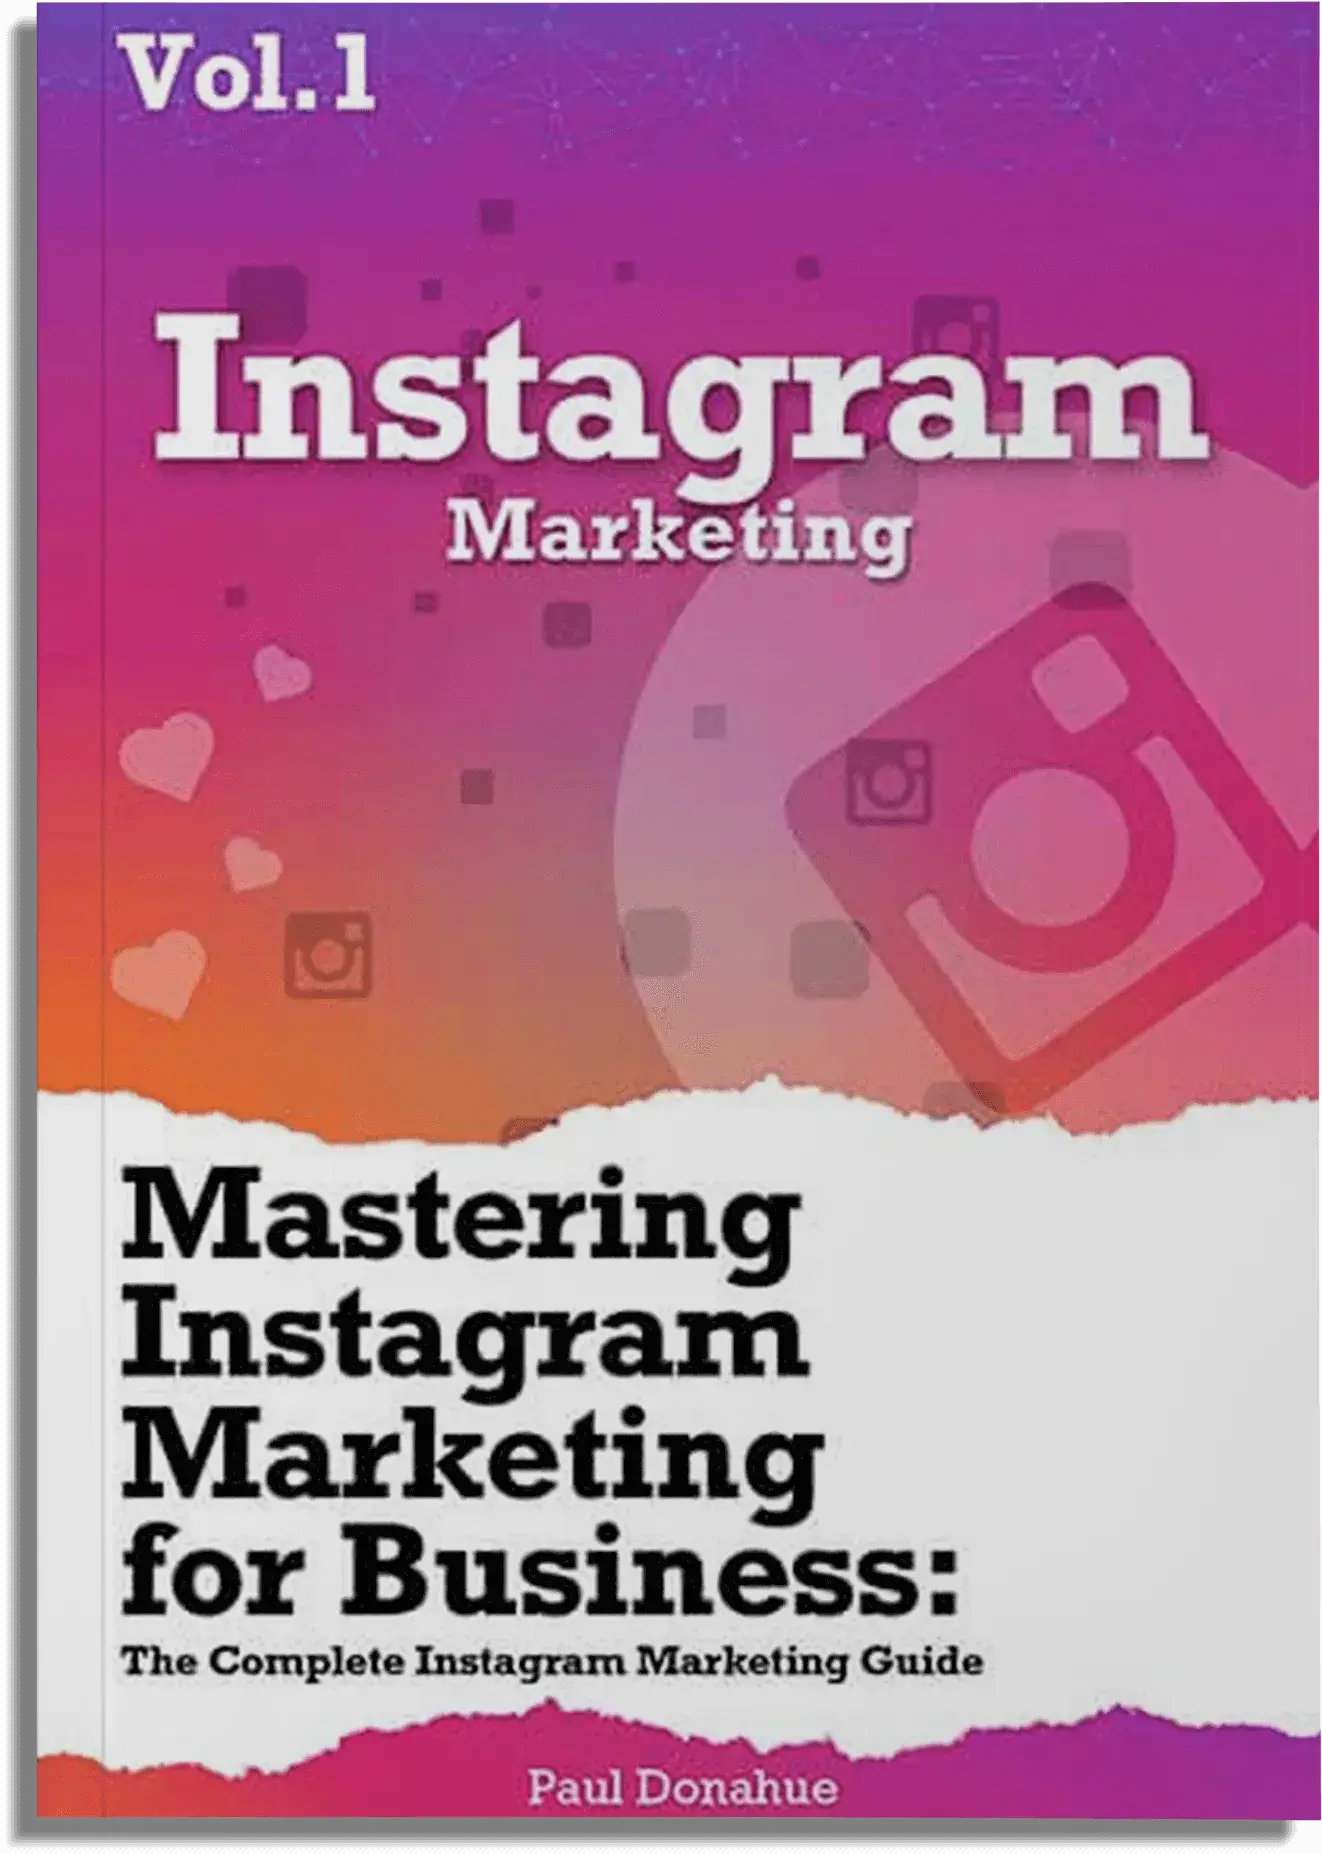 ADMS - Instagram Marketing Book Vol.1